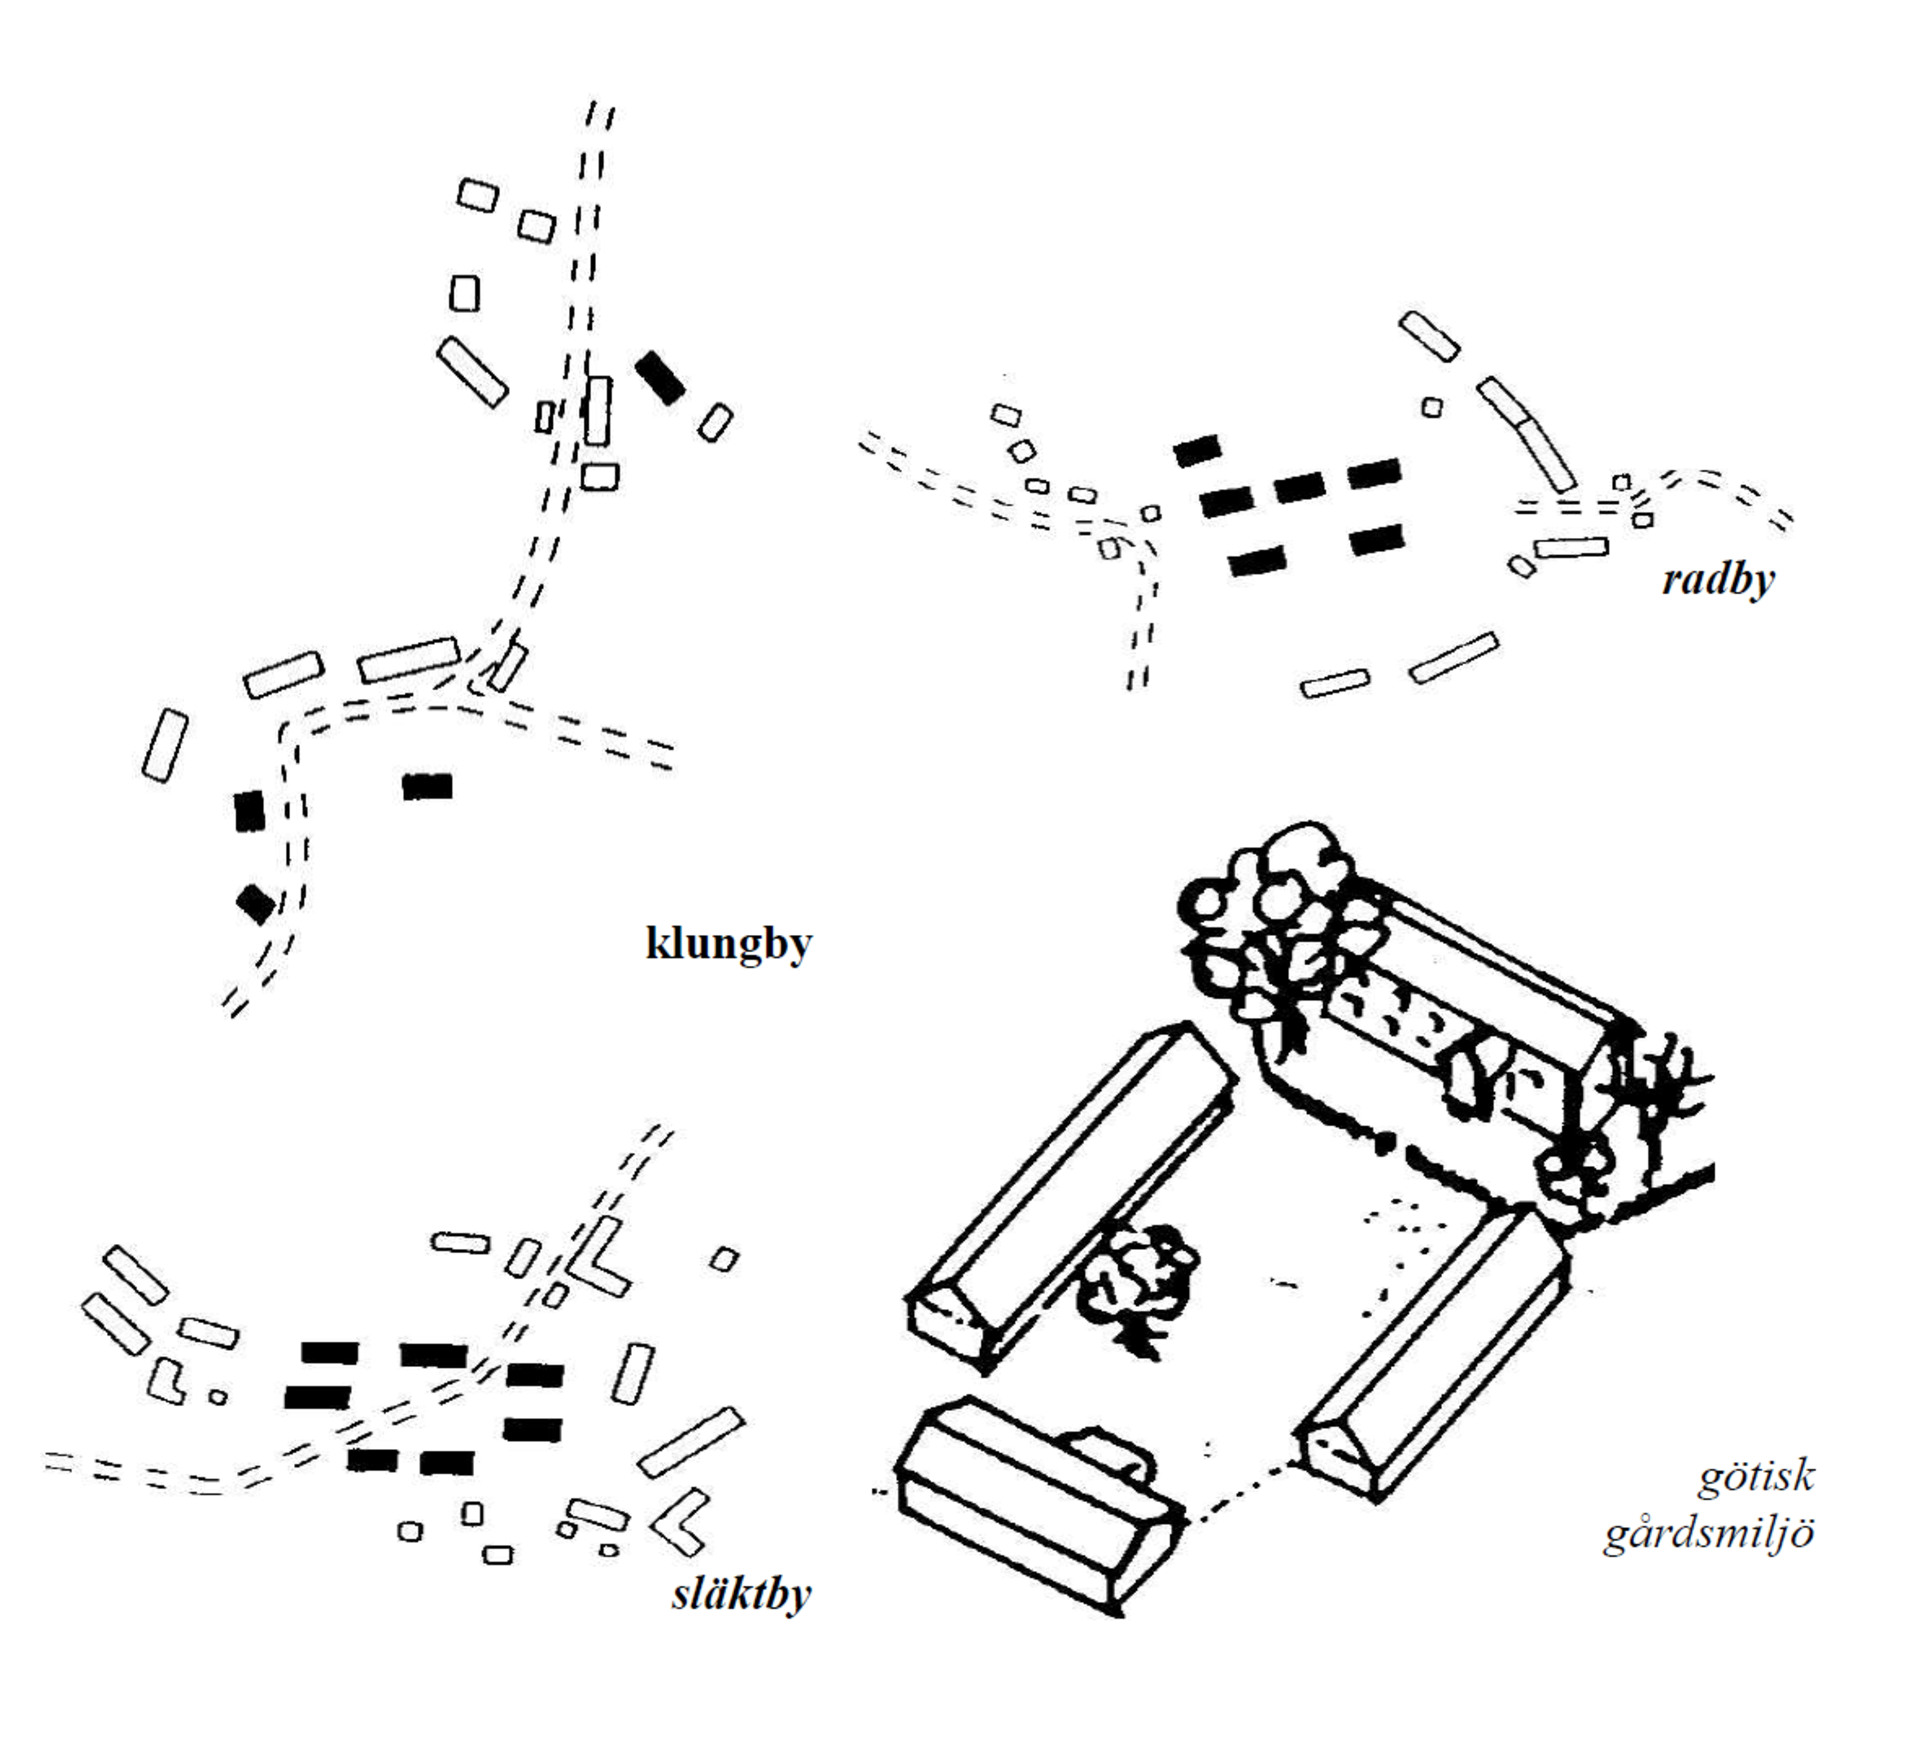 Figur med skisser som visar exempel på olika typer av typisk småländsk bebyggelsestruktur.